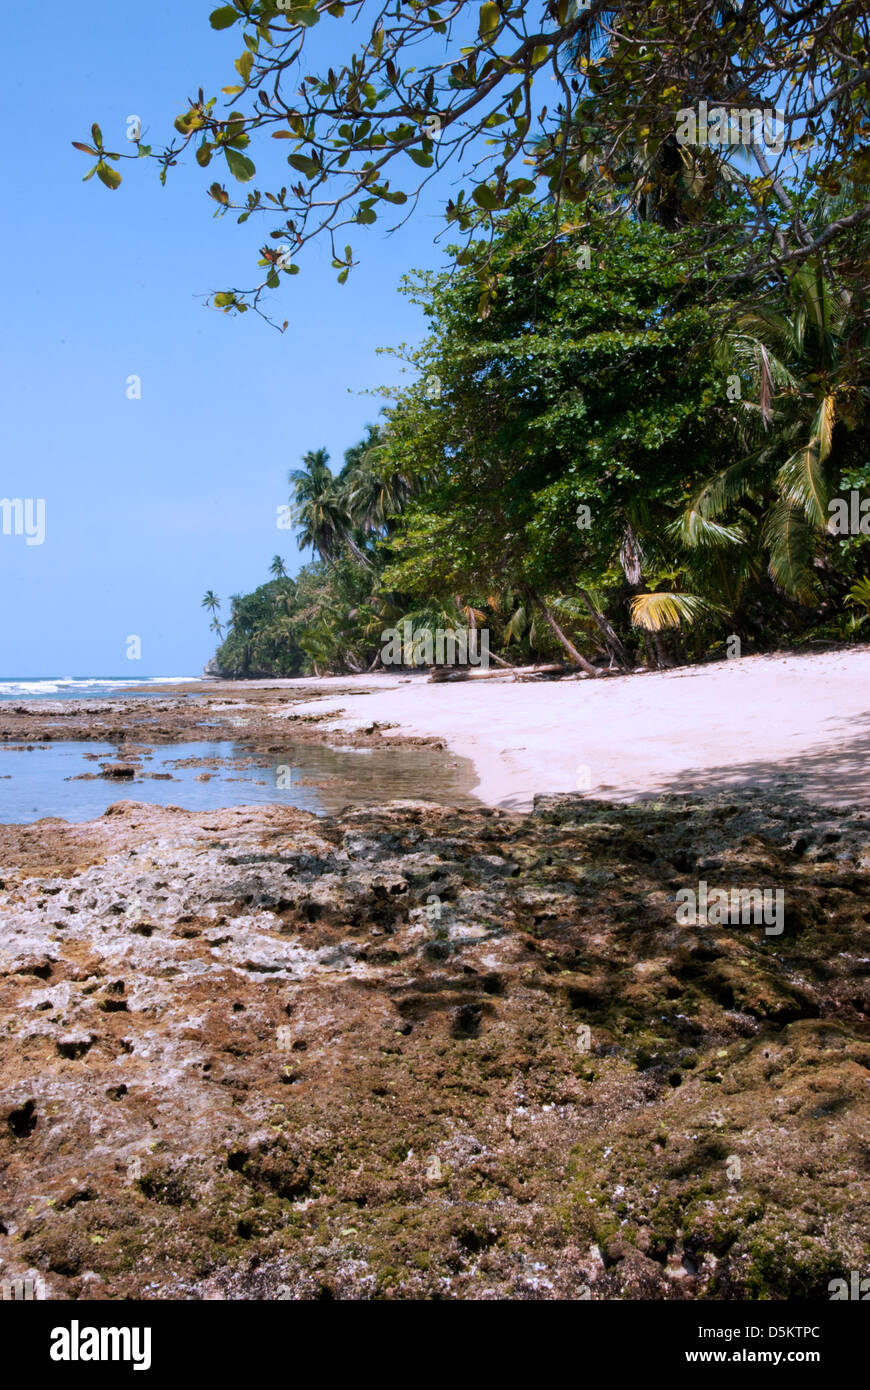 The beach in Costa Rica, with jungle reaching beach, Playa Manzanillo. Central America. Stock Photo